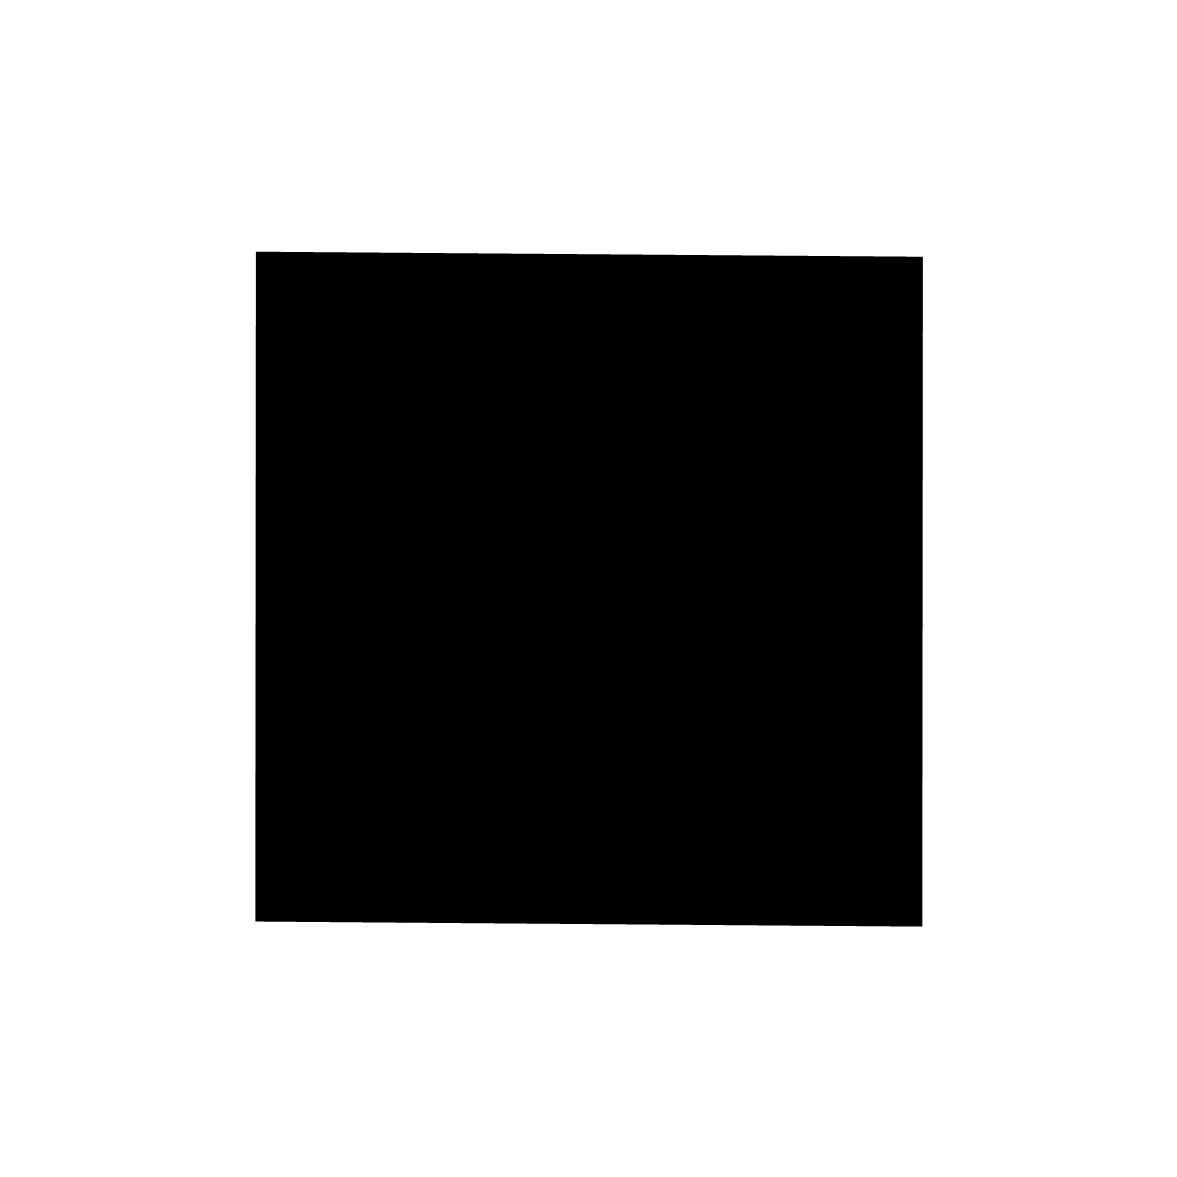 Moosgummidichtung vierkant | 18 mm Höhe | Farbe: schwarz